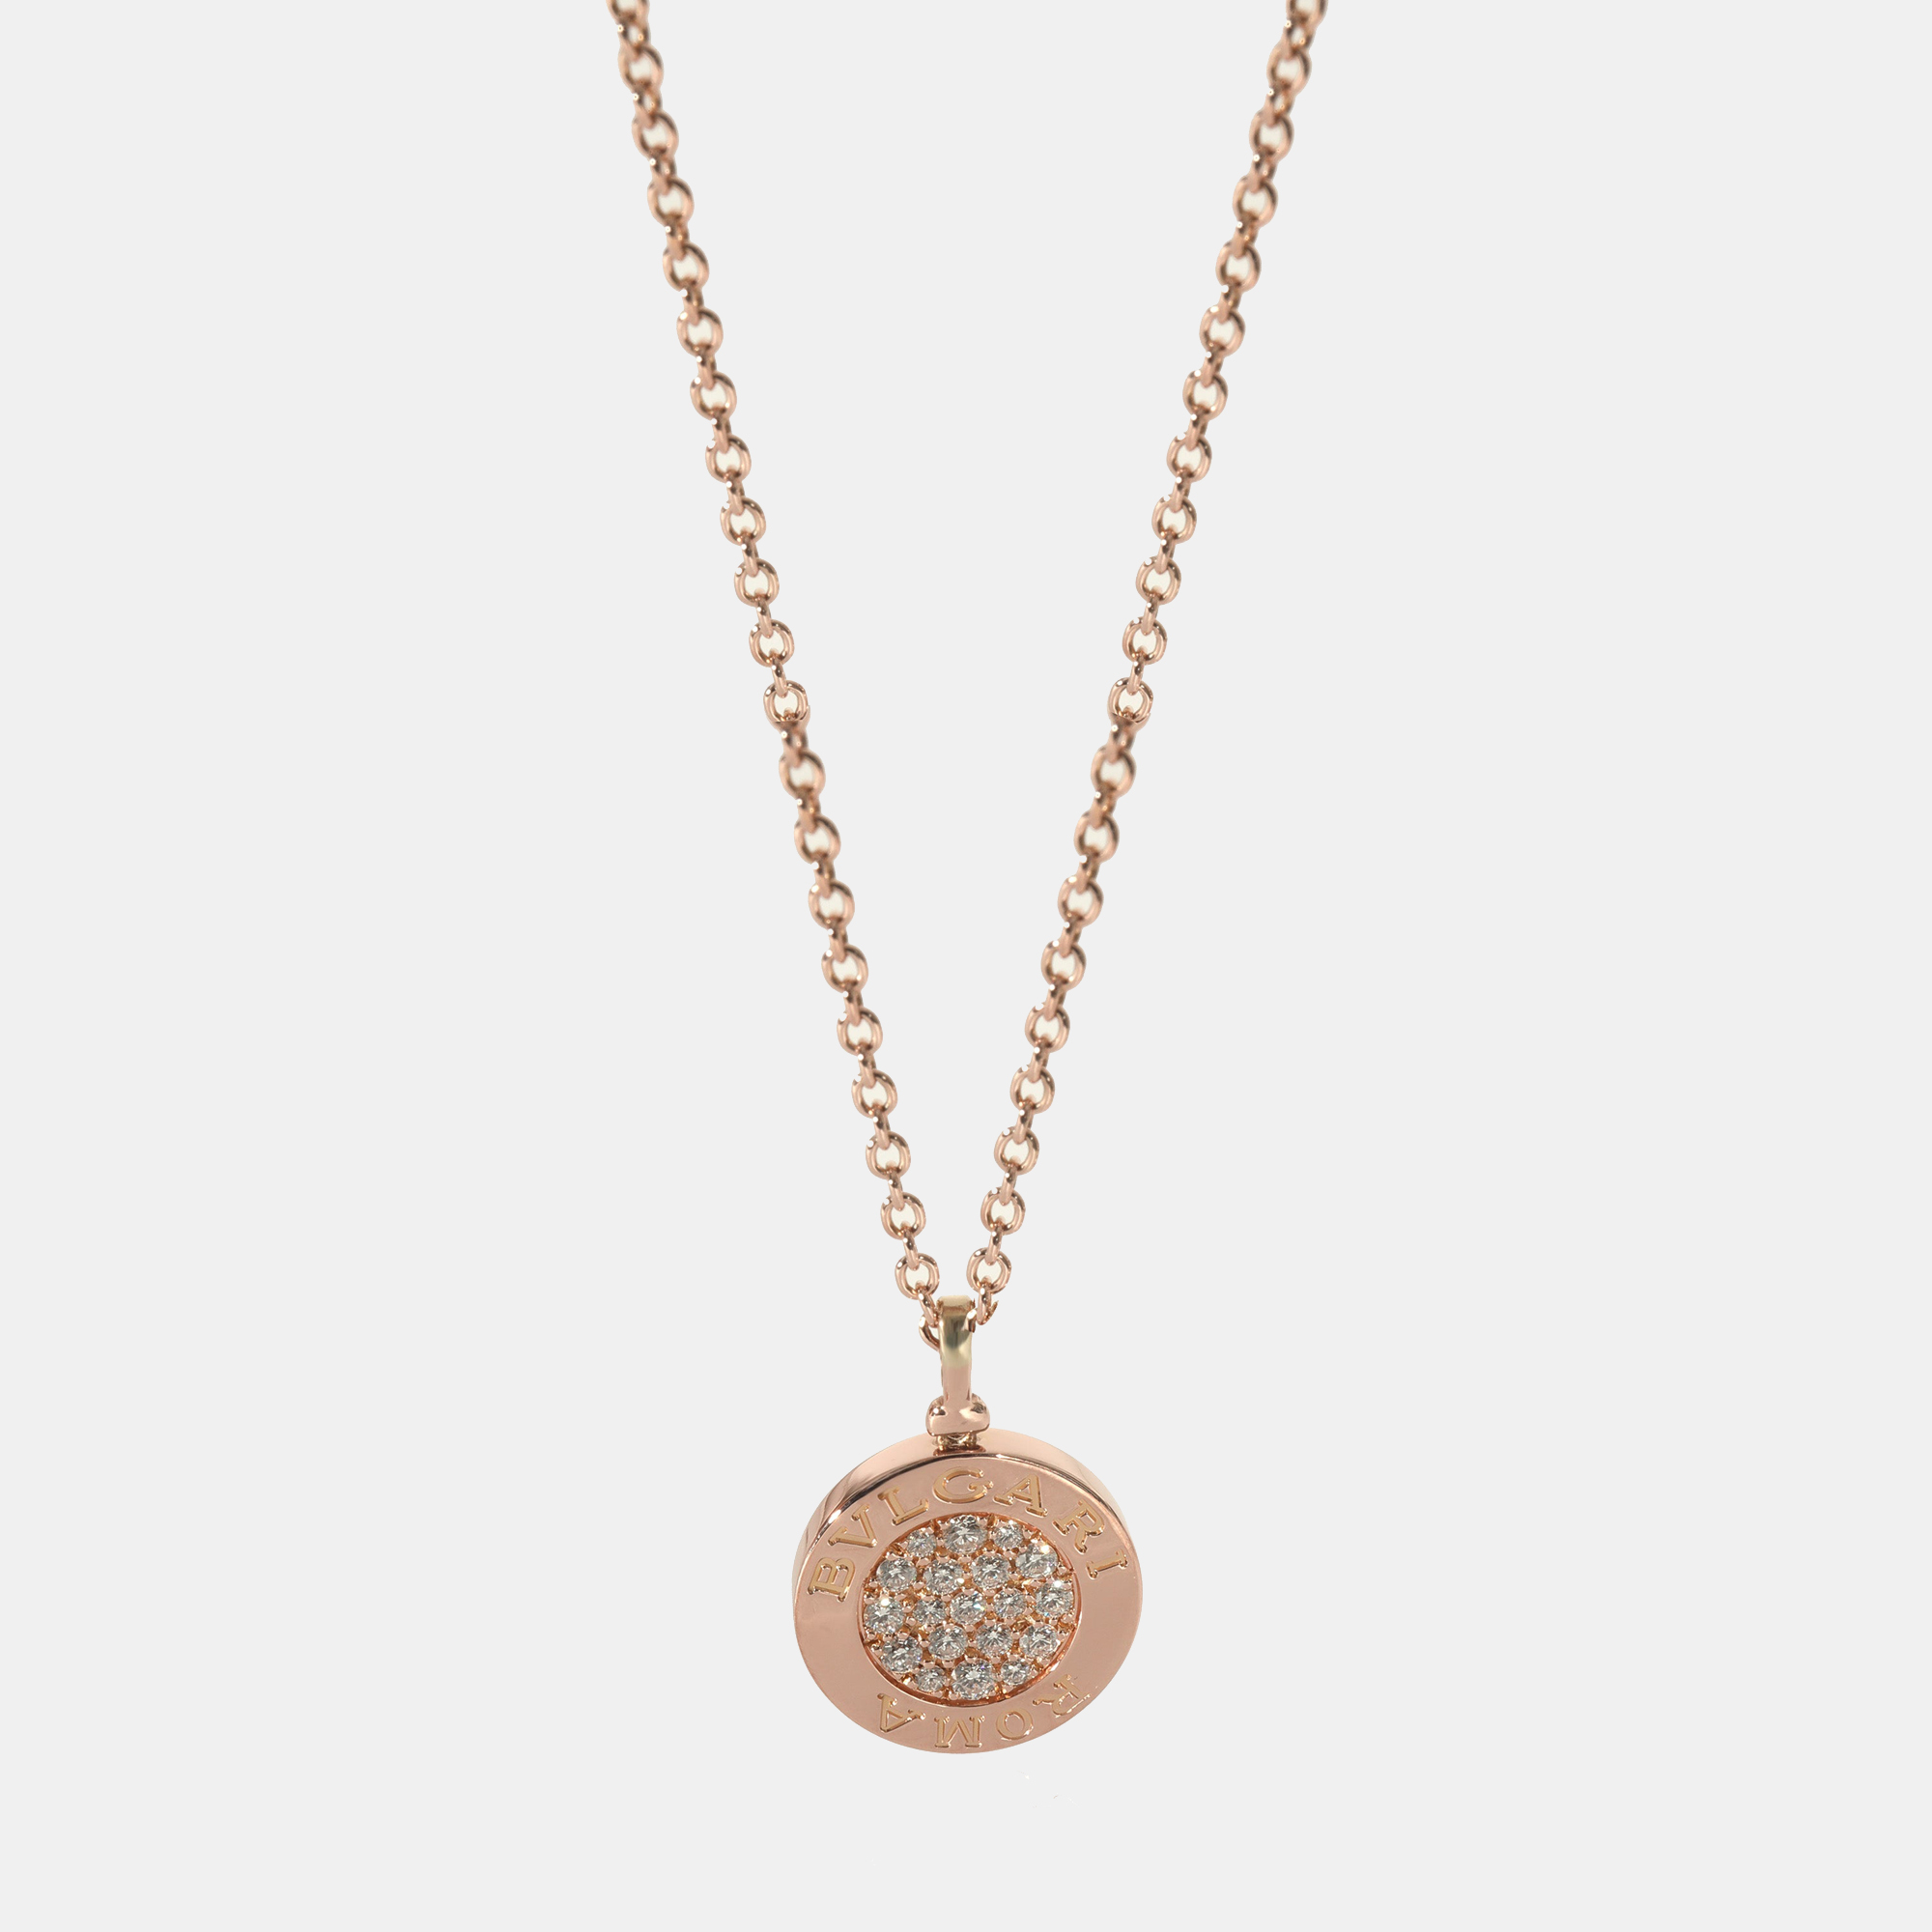 Bvlgari diamond necklace in 18k rose gold 0.34 ctw